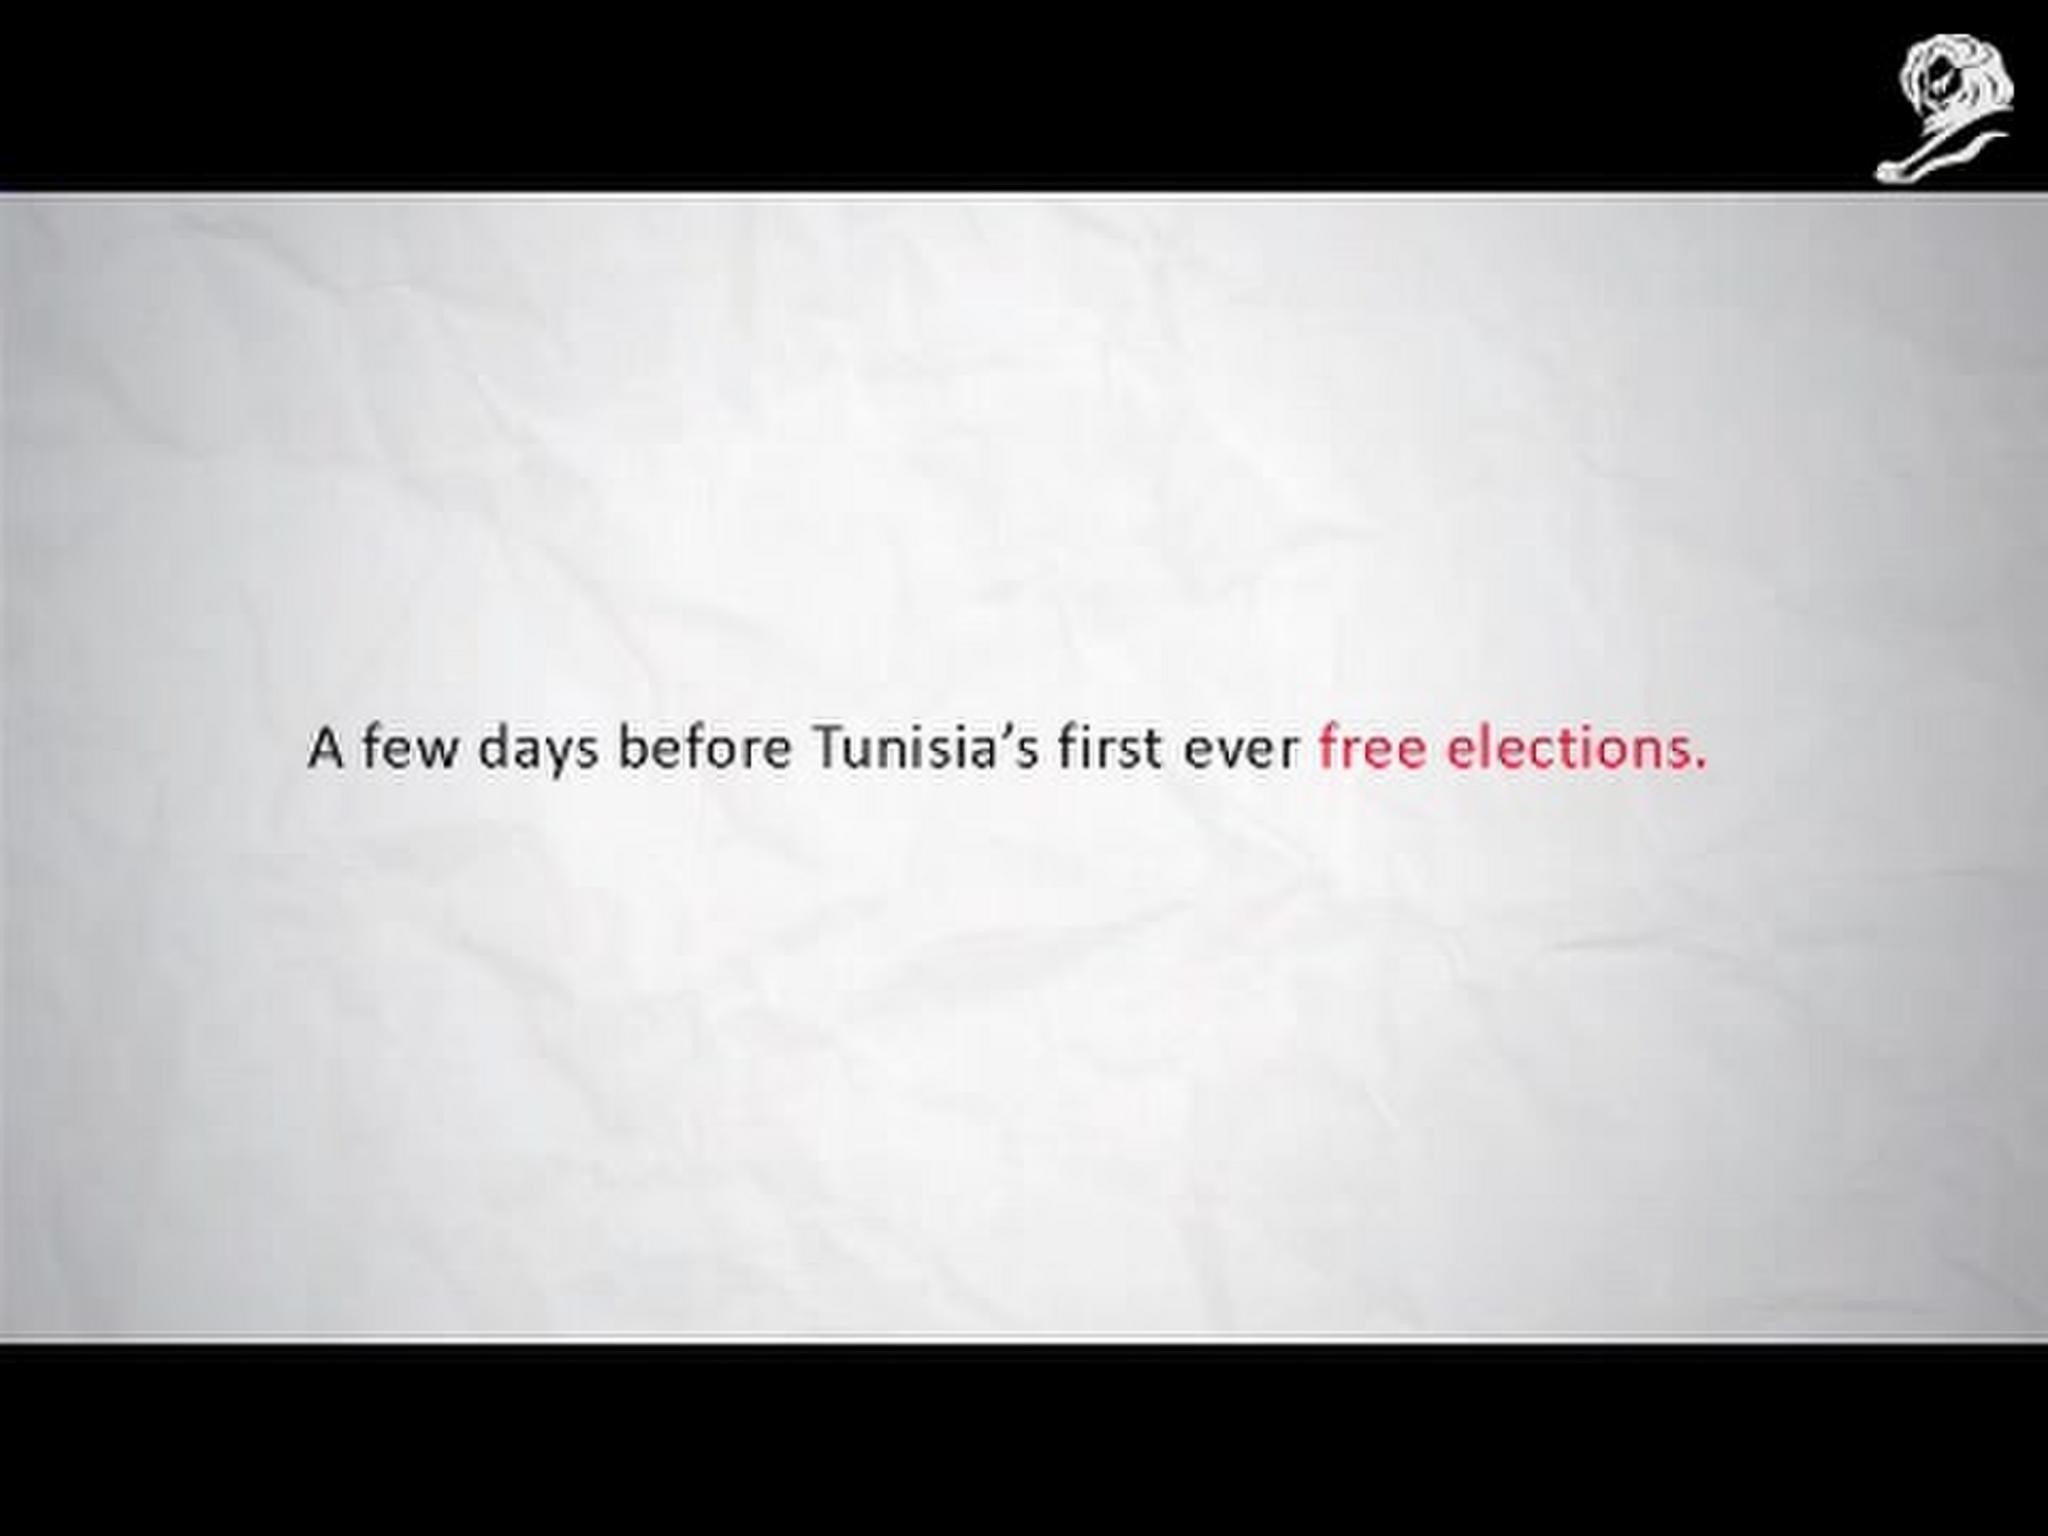 TUNISIAN DEMOCRACY